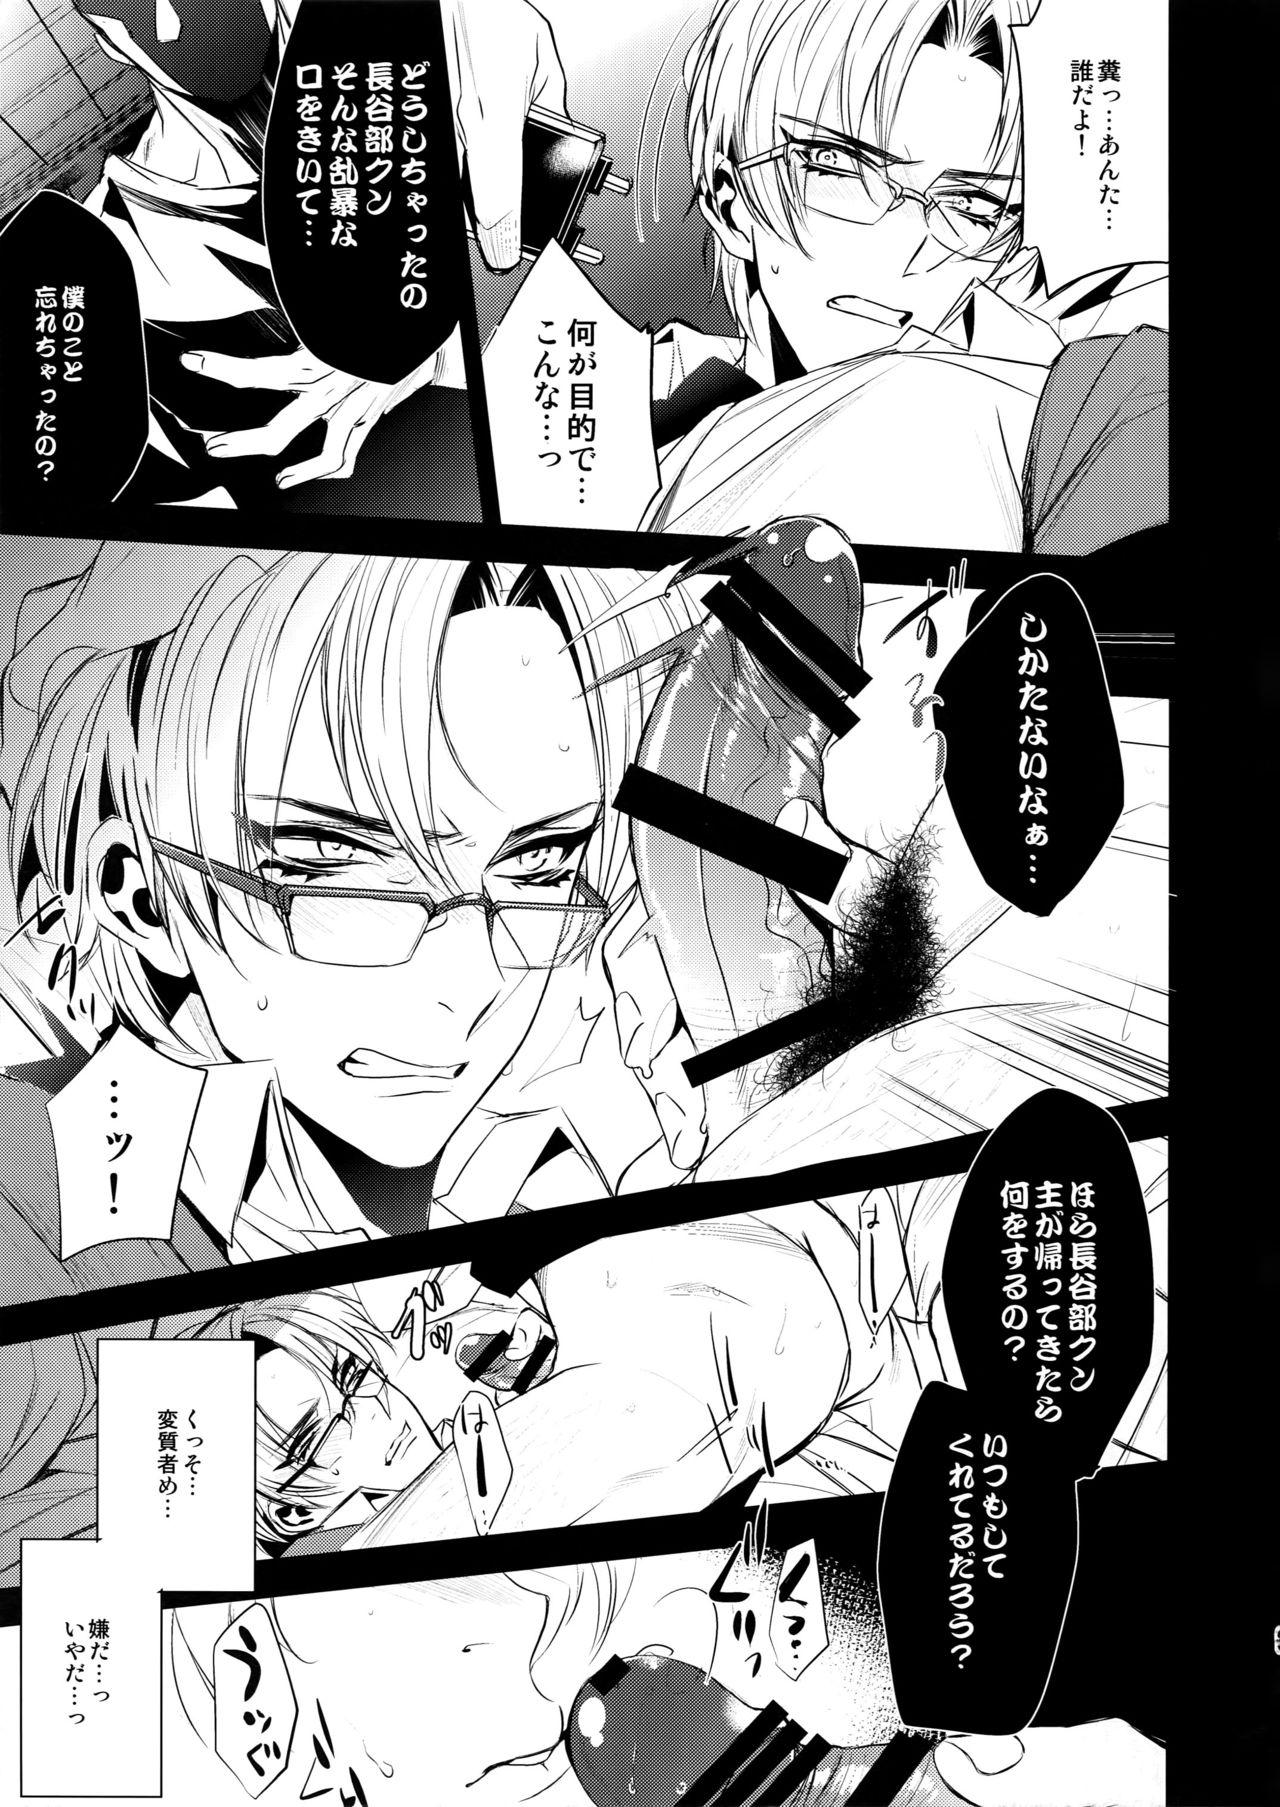 Letsdoeit Hasebe-kun Miitsuketa - Touken ranbu Naughty - Page 8